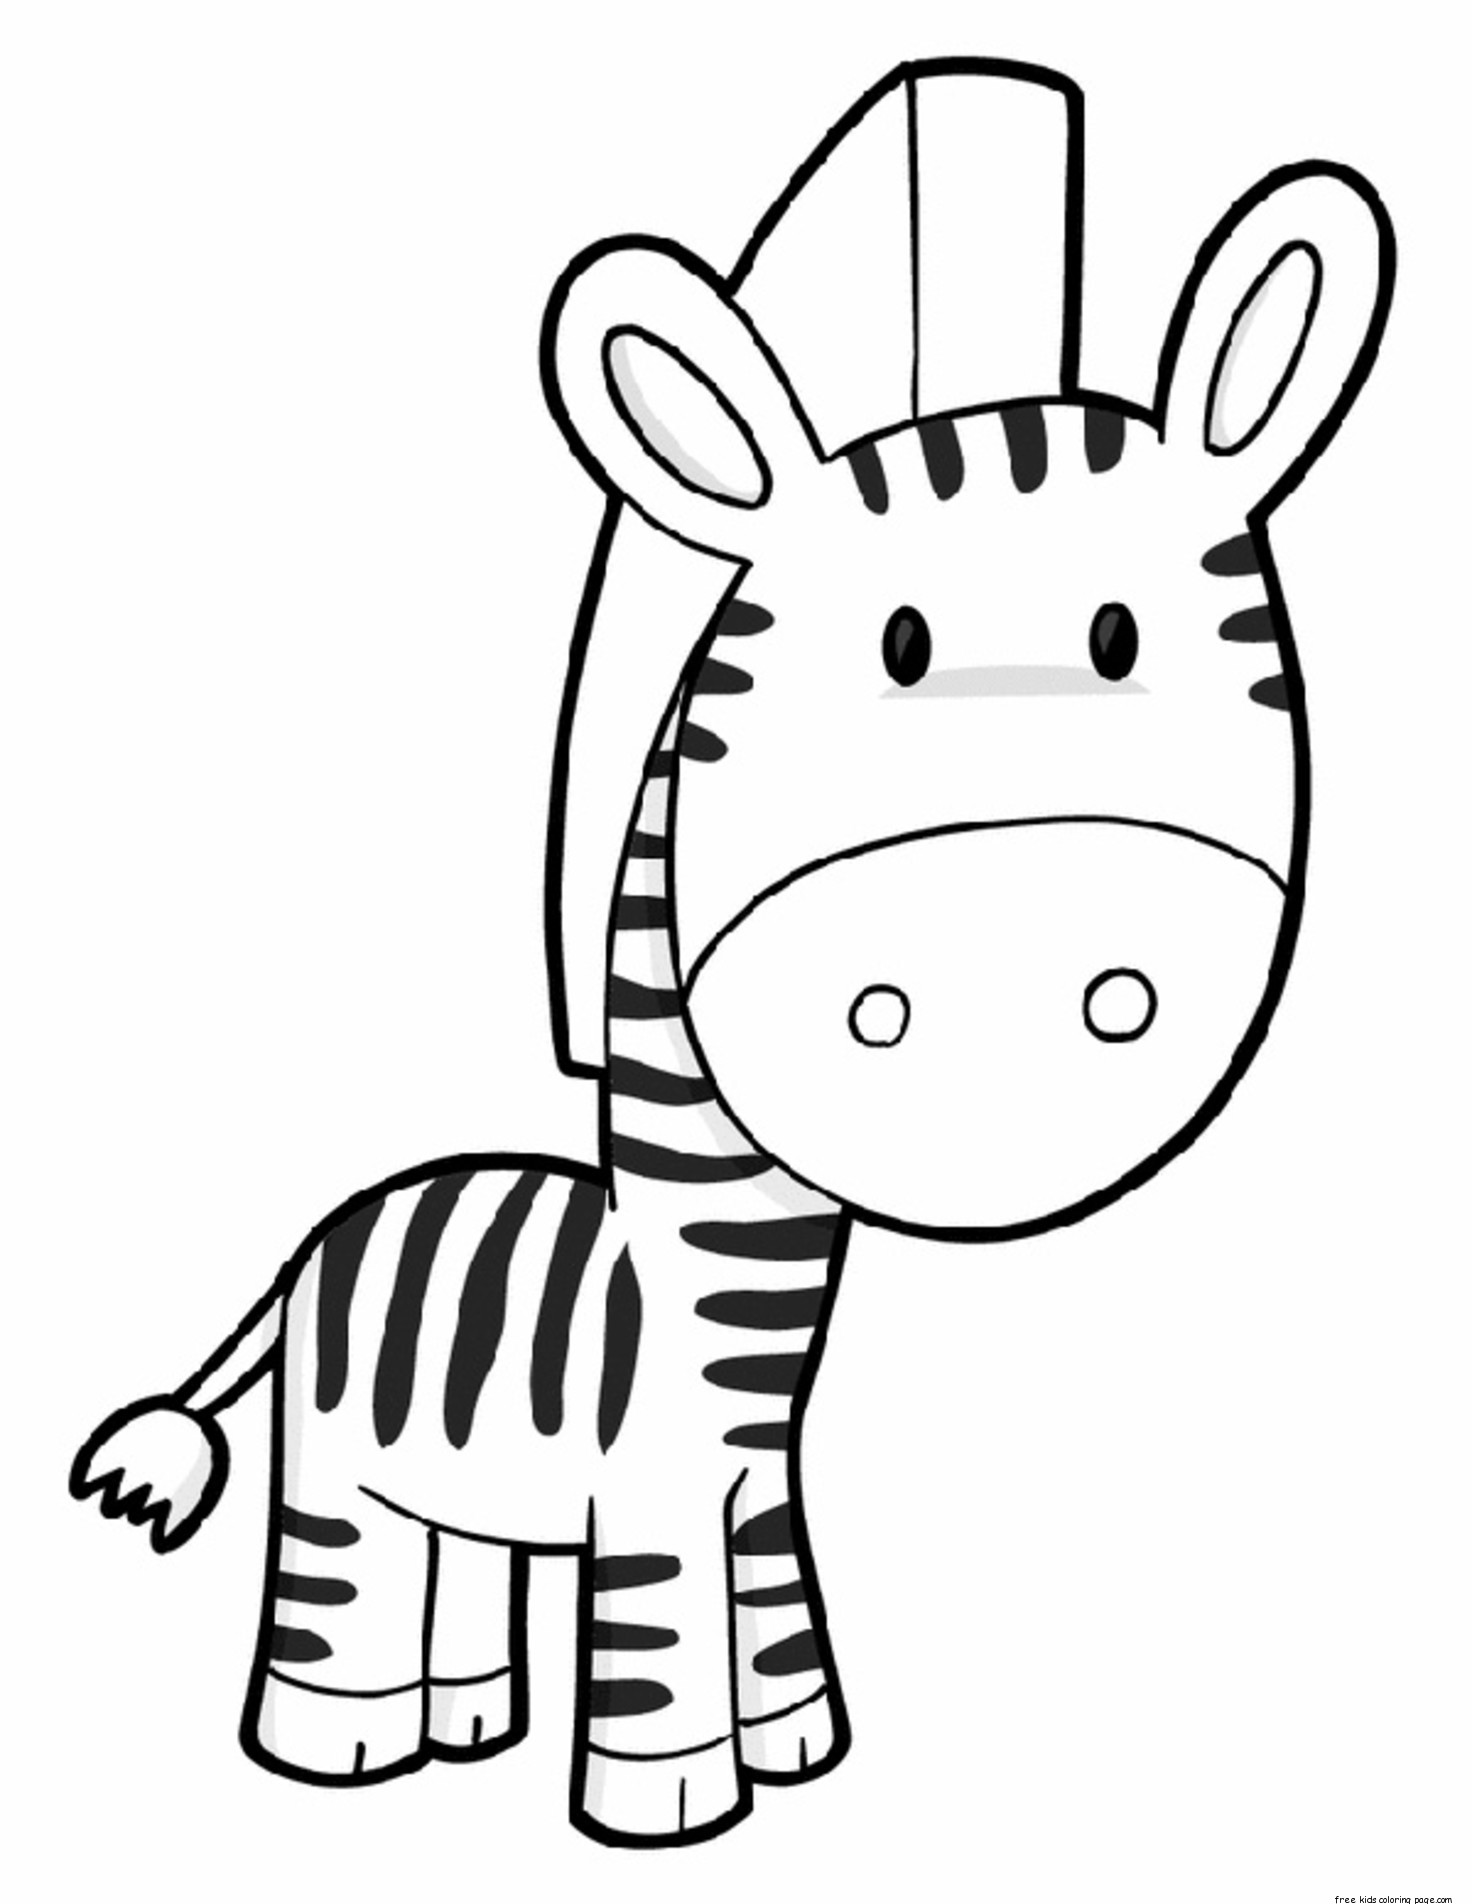 Printable zebra preschool coloring page for kidsFree Printable Coloring